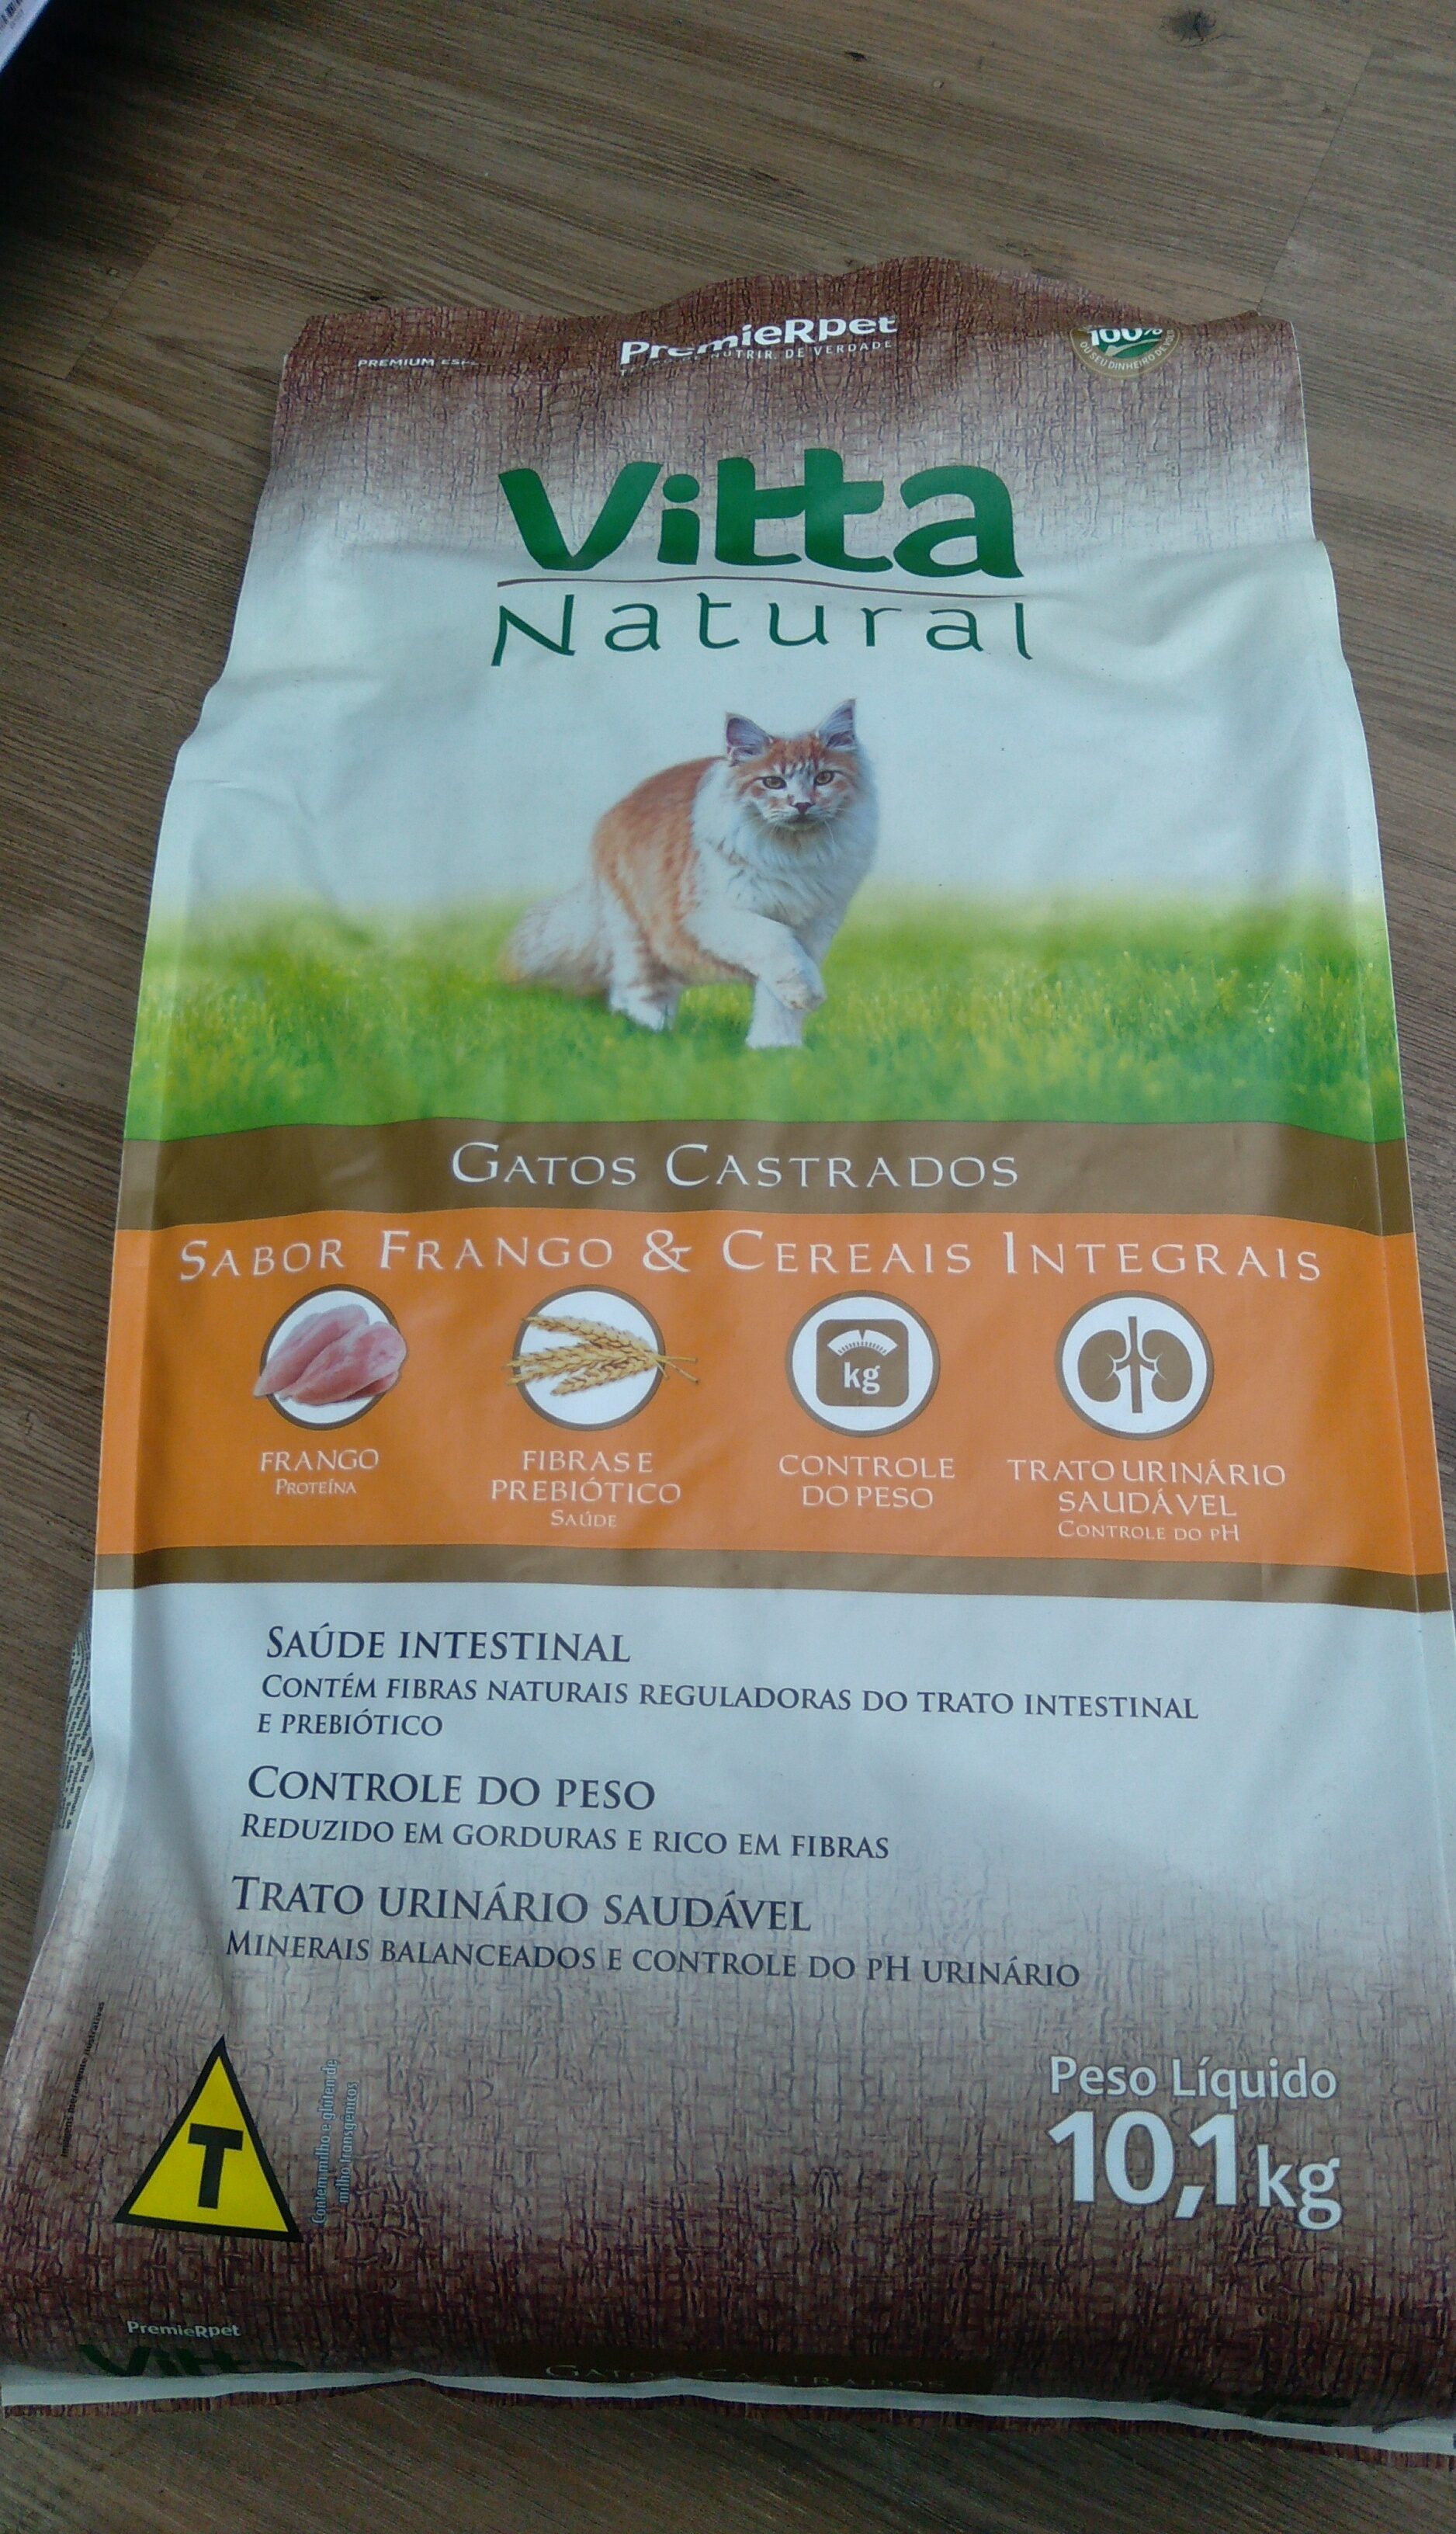 Vitta Natural Gatos Castrados 10kg - Product - pt